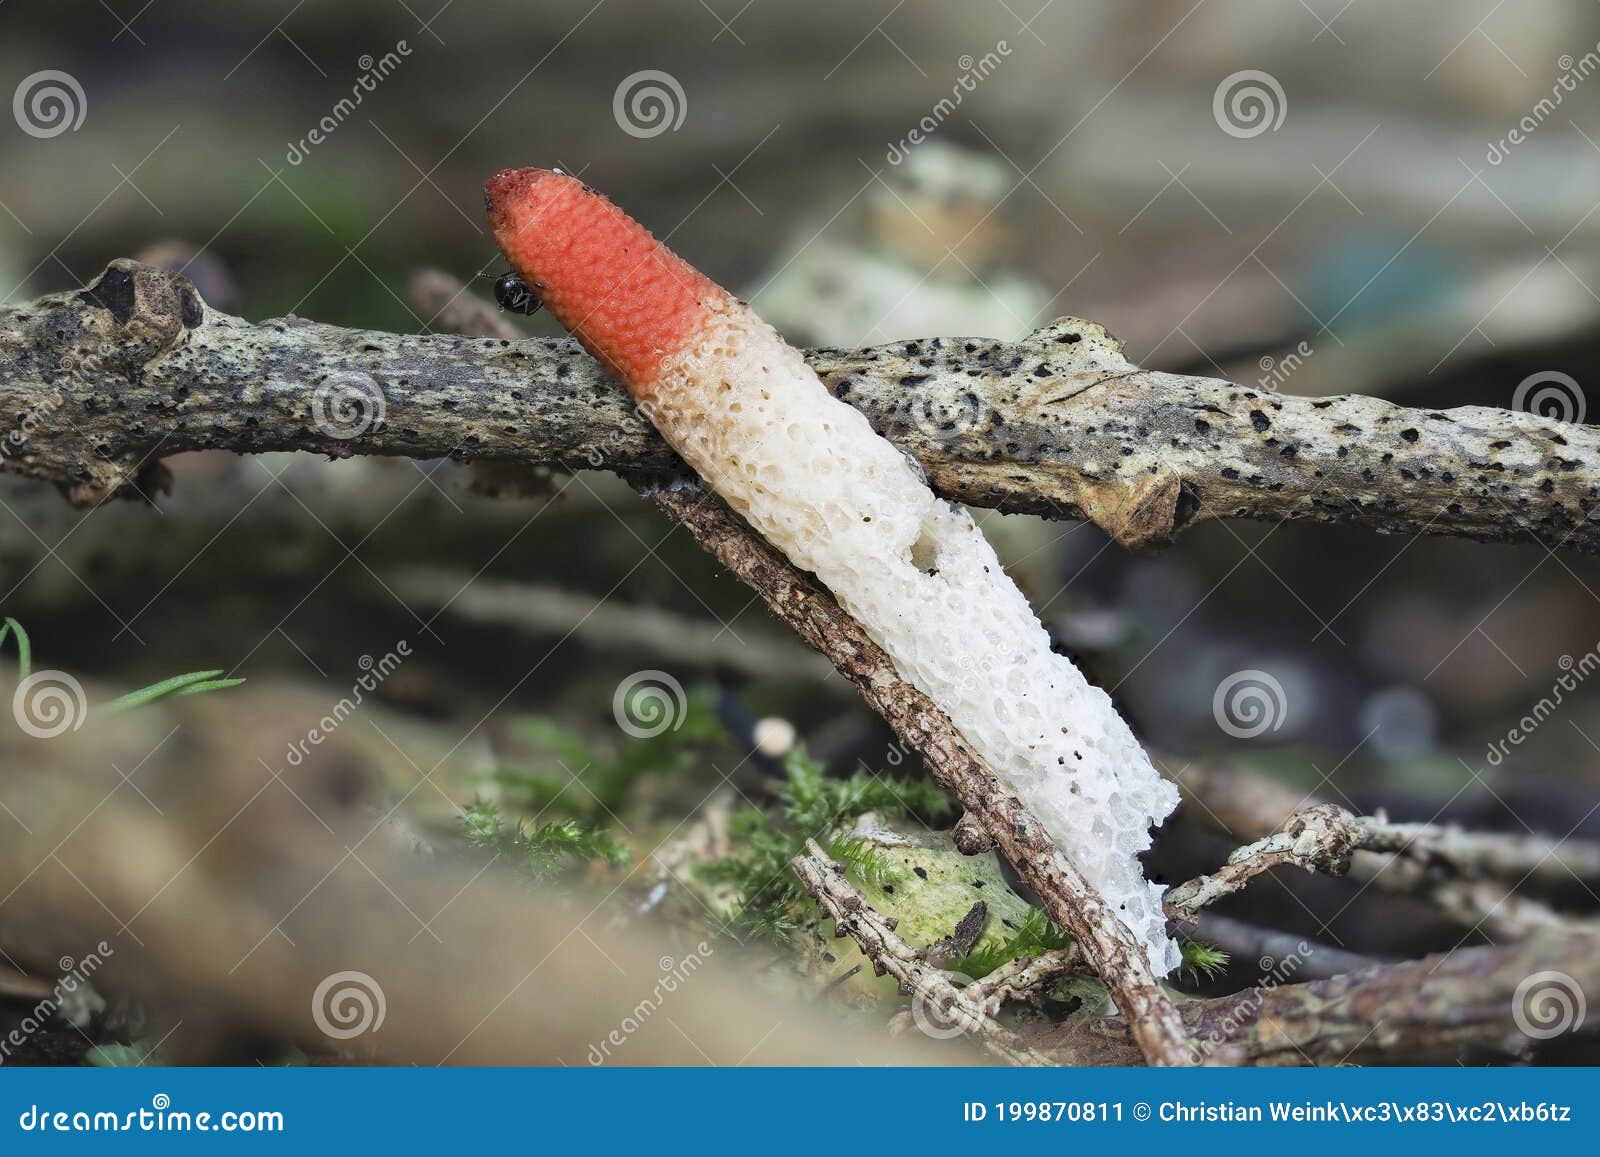 the dog stinkhorn mutinus caninus is an inedible mushroom